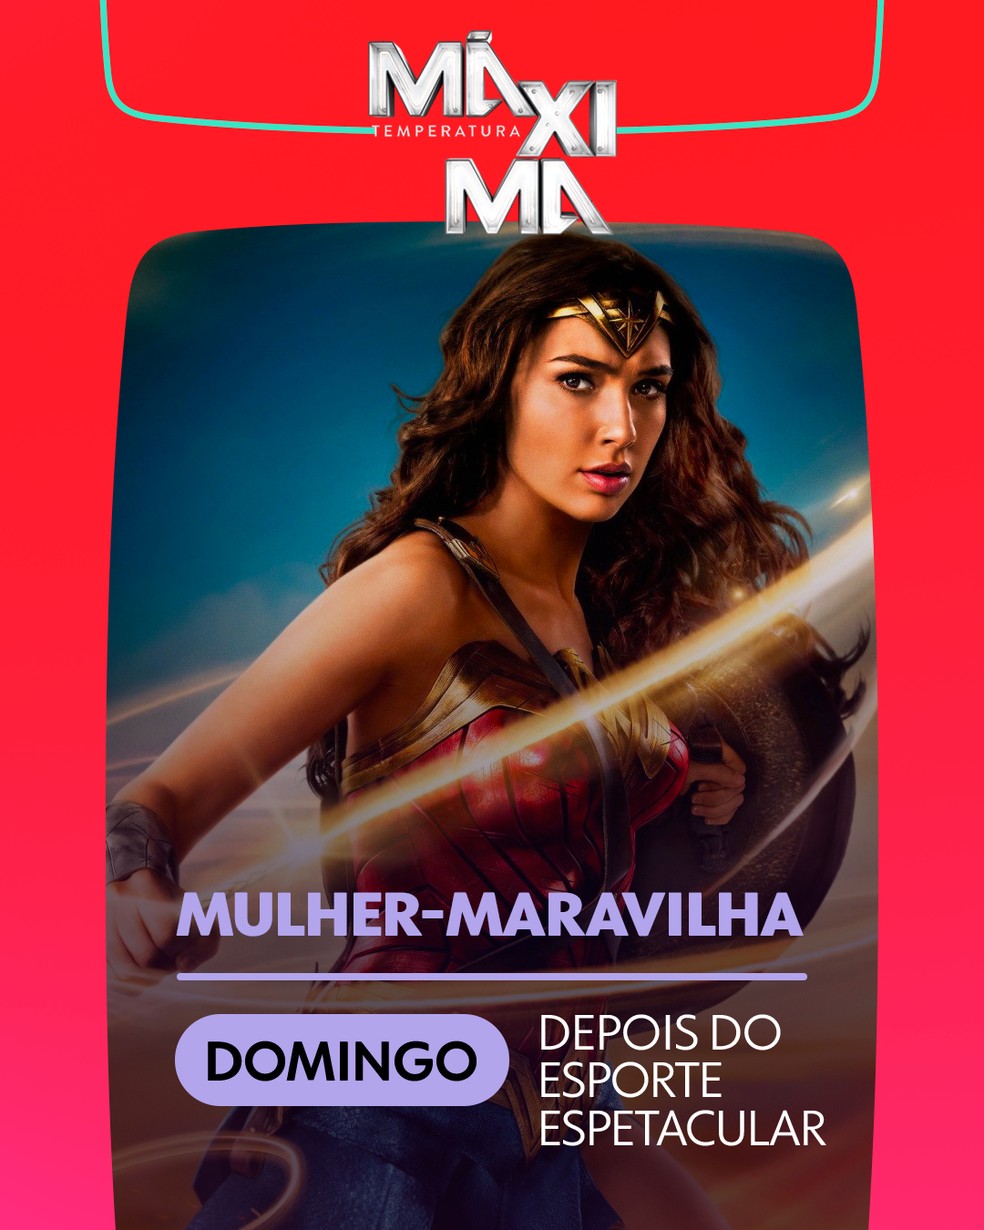 Supercine – Saiba qual filme a TV Globo exibe neste sábado